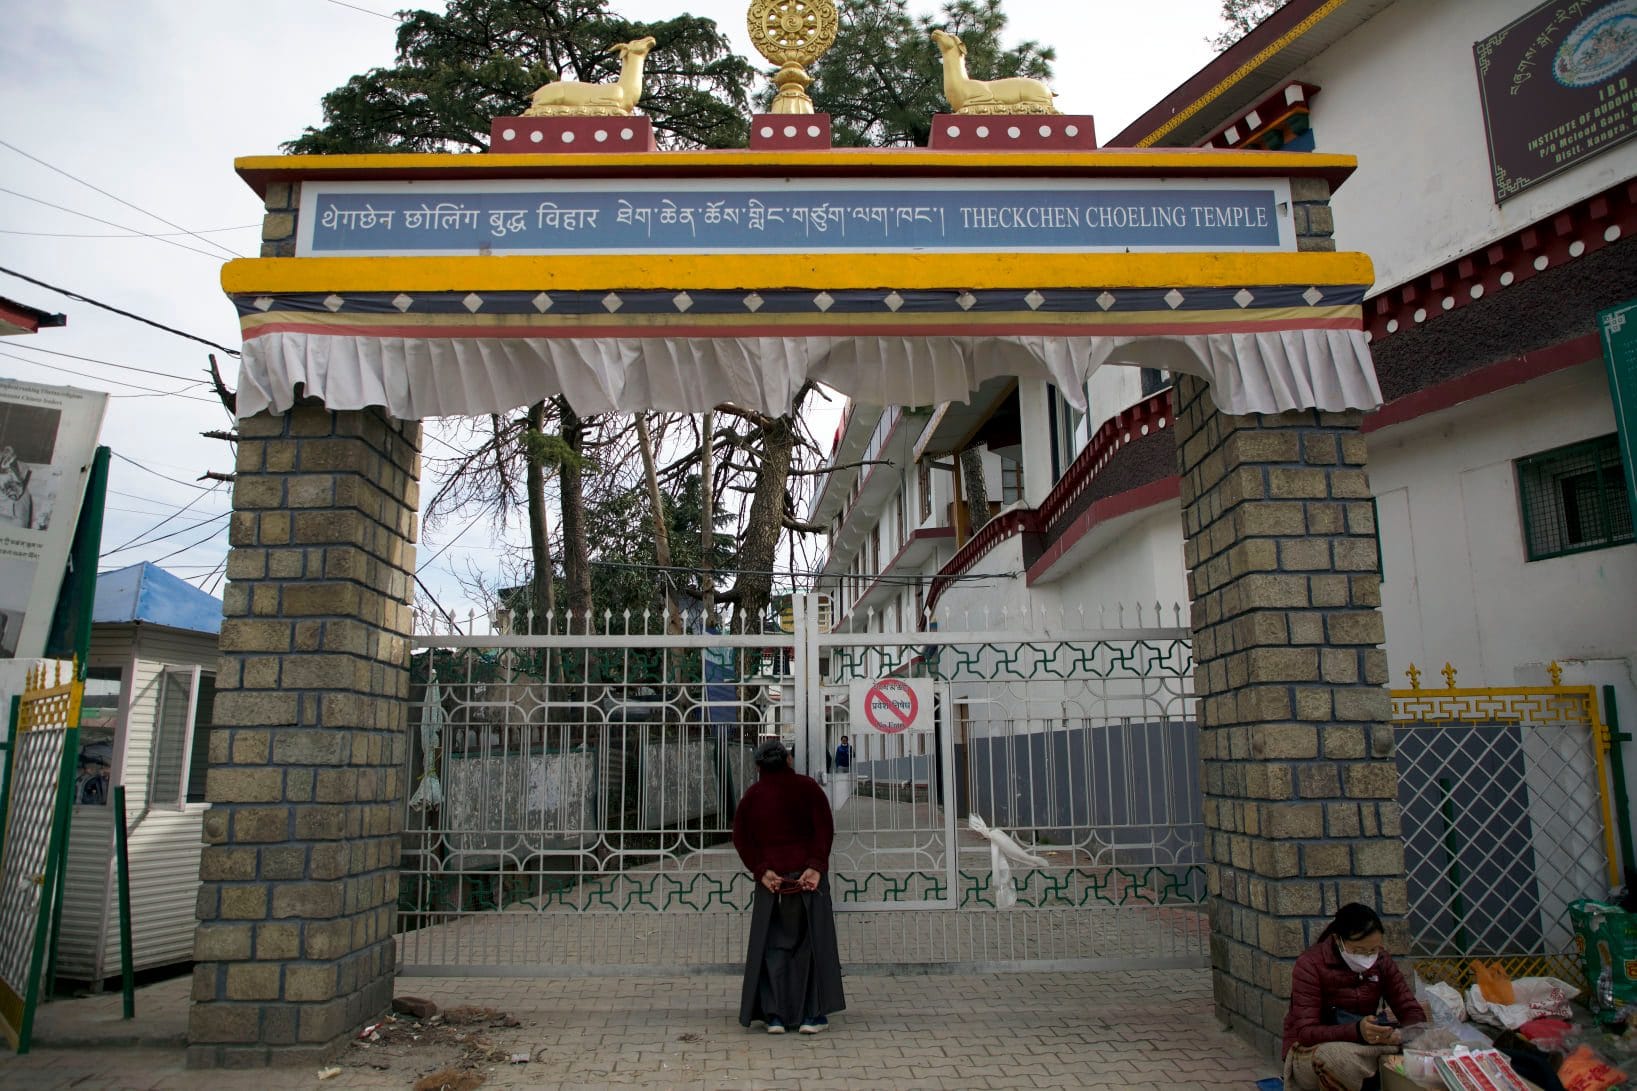 Dalai Lama temple gate at McLeod Ganj Photo VOA Tibetan Dalai Lama’s temple to open for public after two years